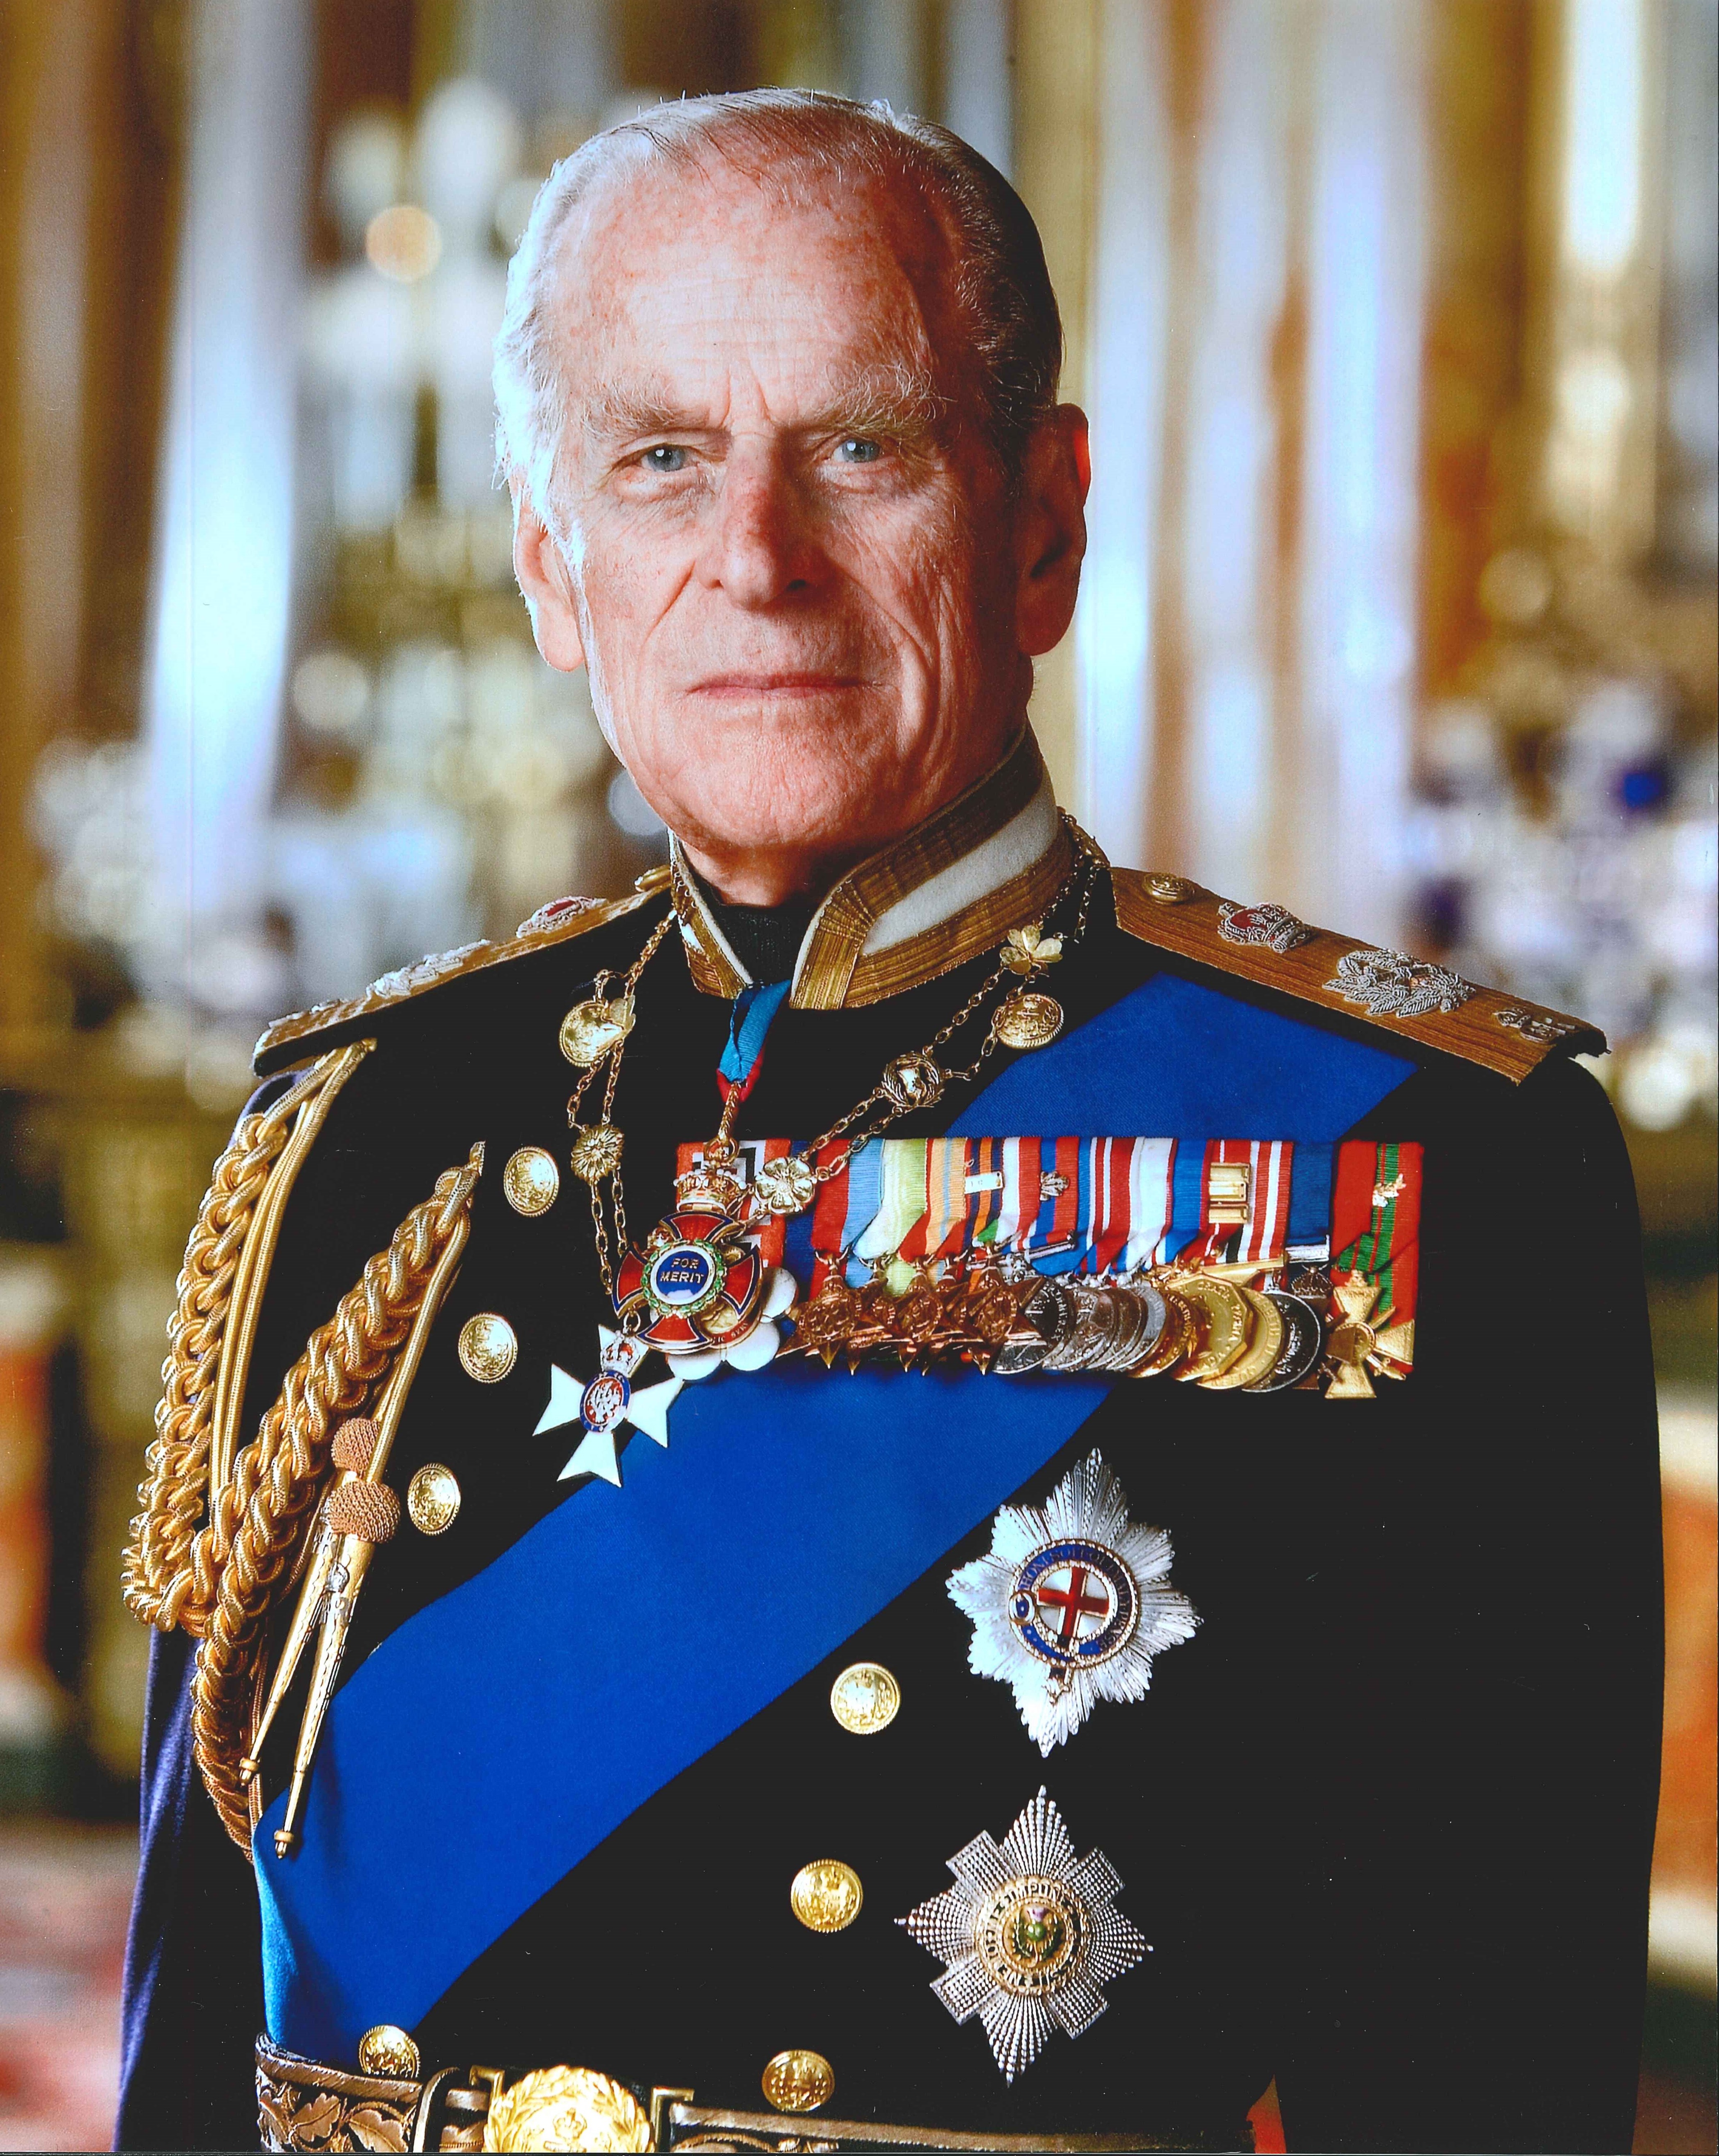 A photo of His Royal Highness Prince Philip, The Duke of Edinburgh